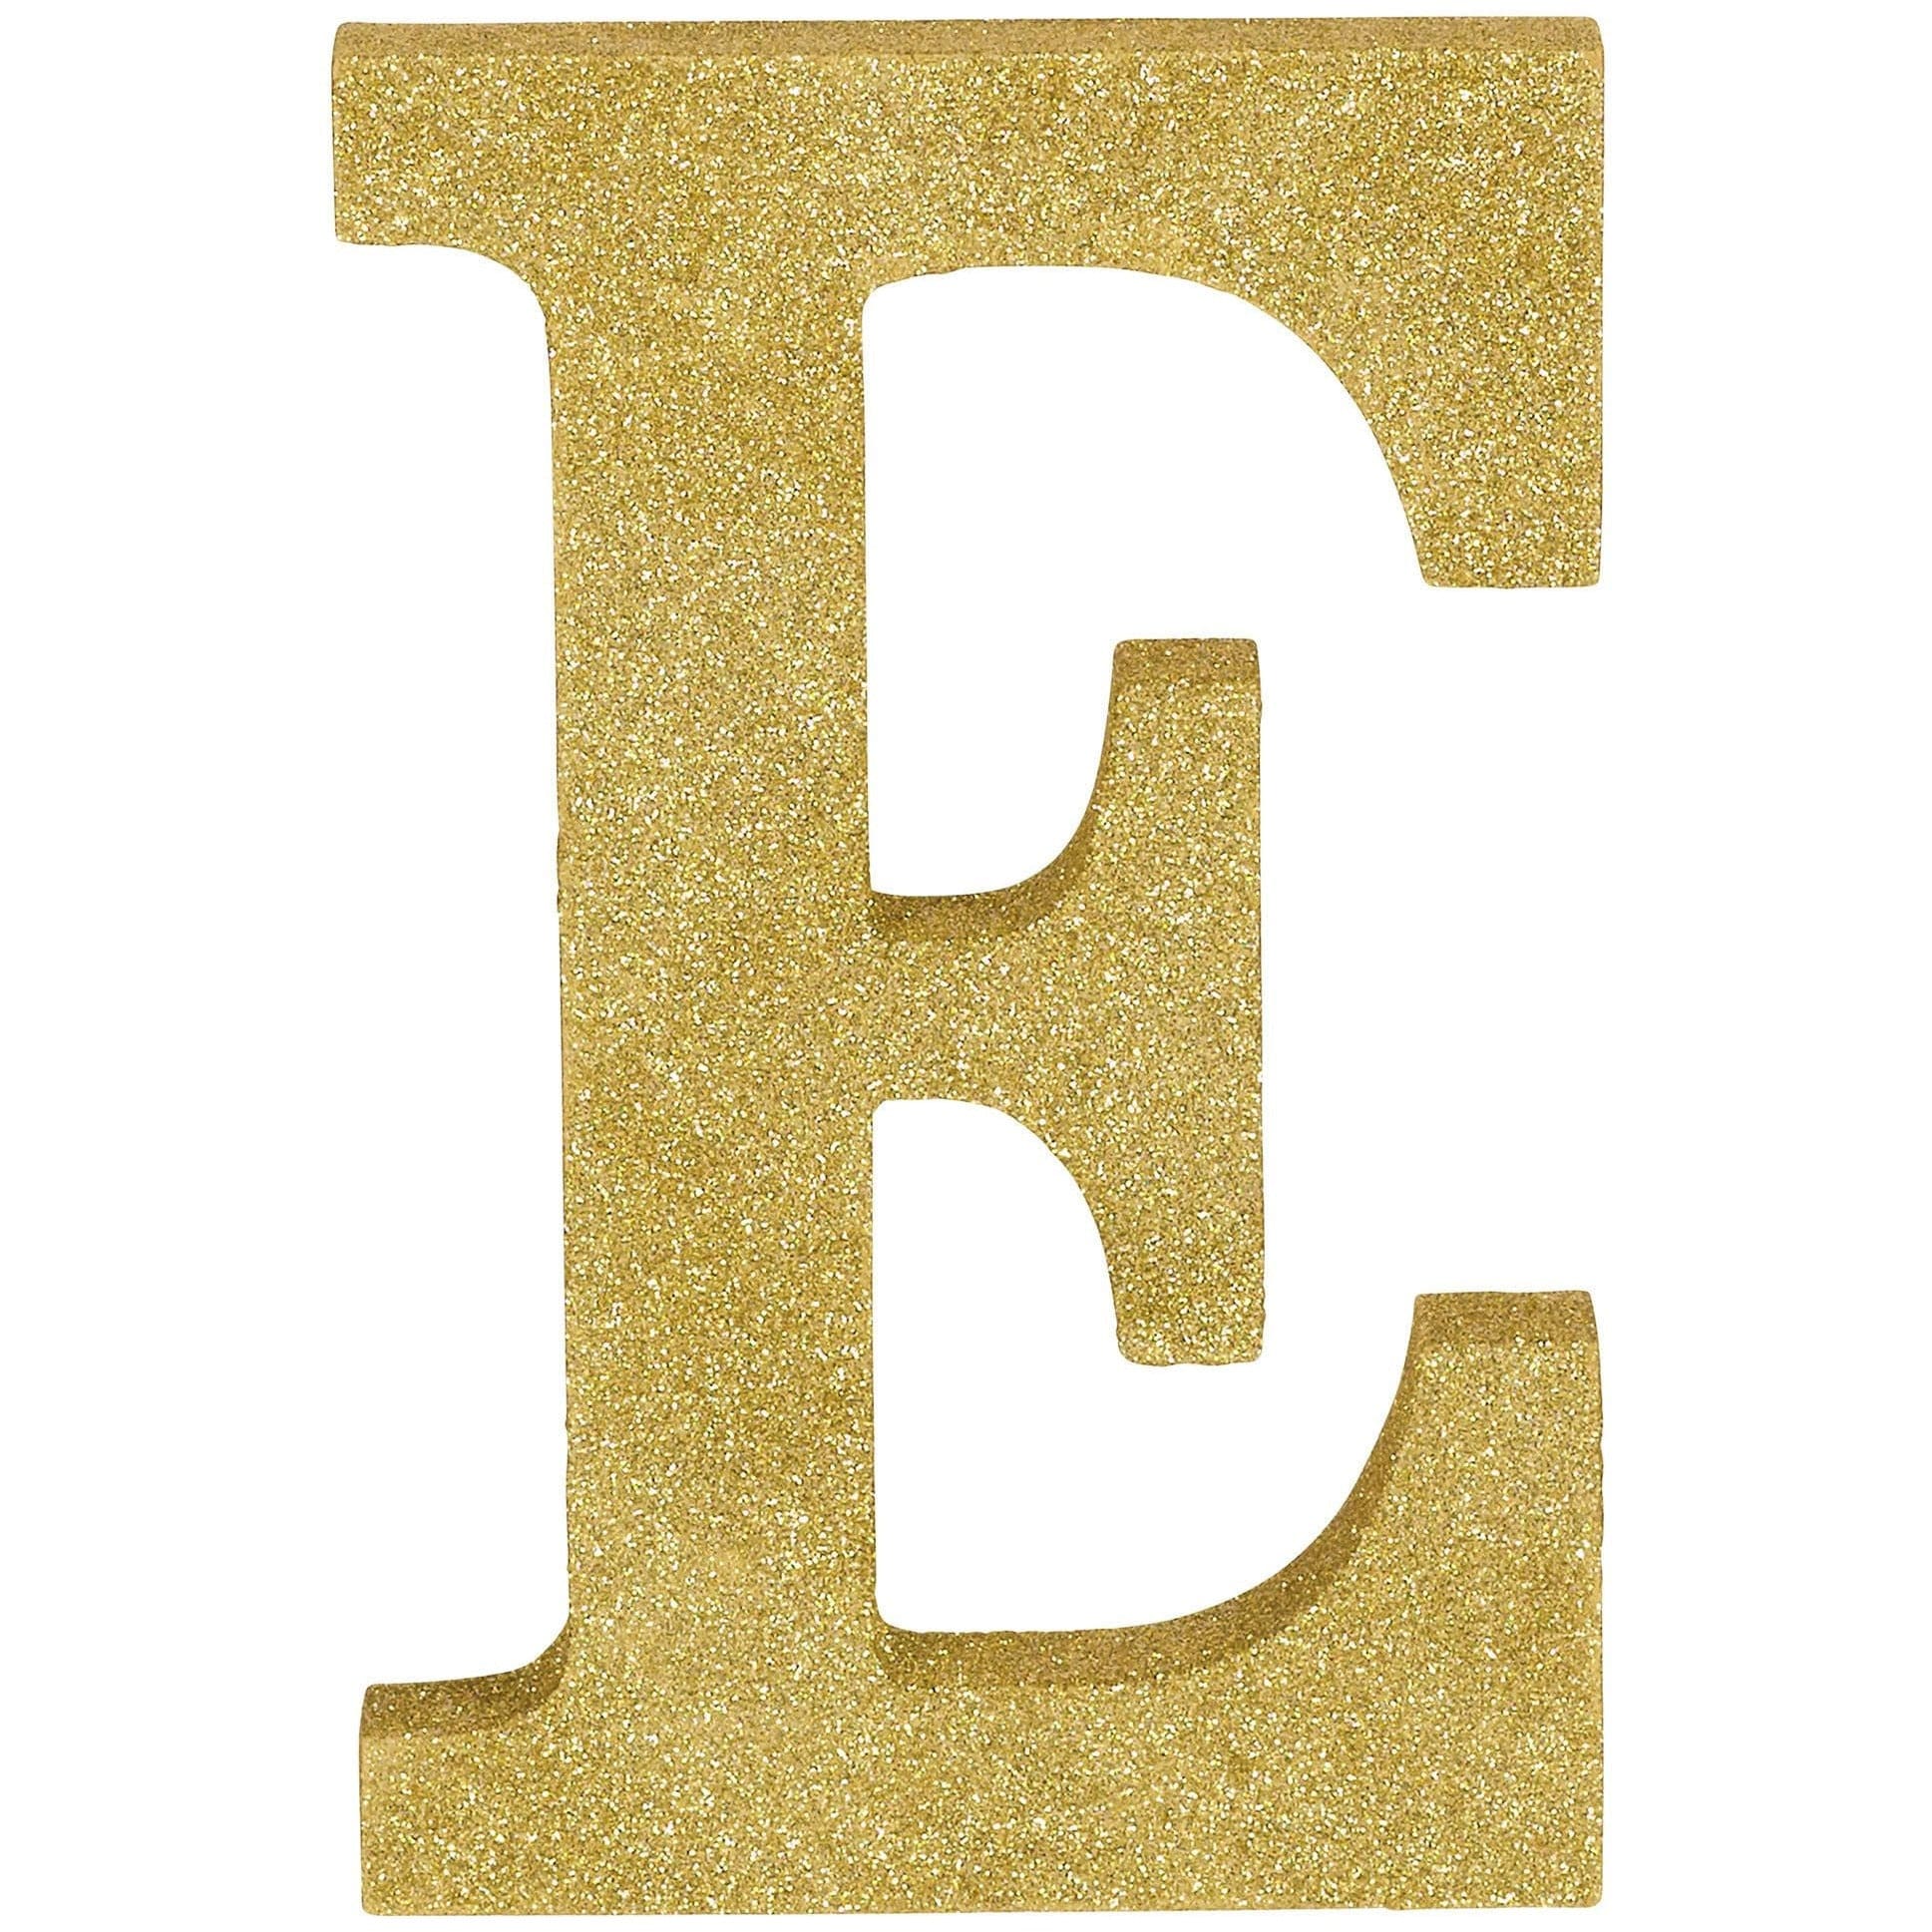 Amscan DECORATIONS Glitter Gold Letter E Sign